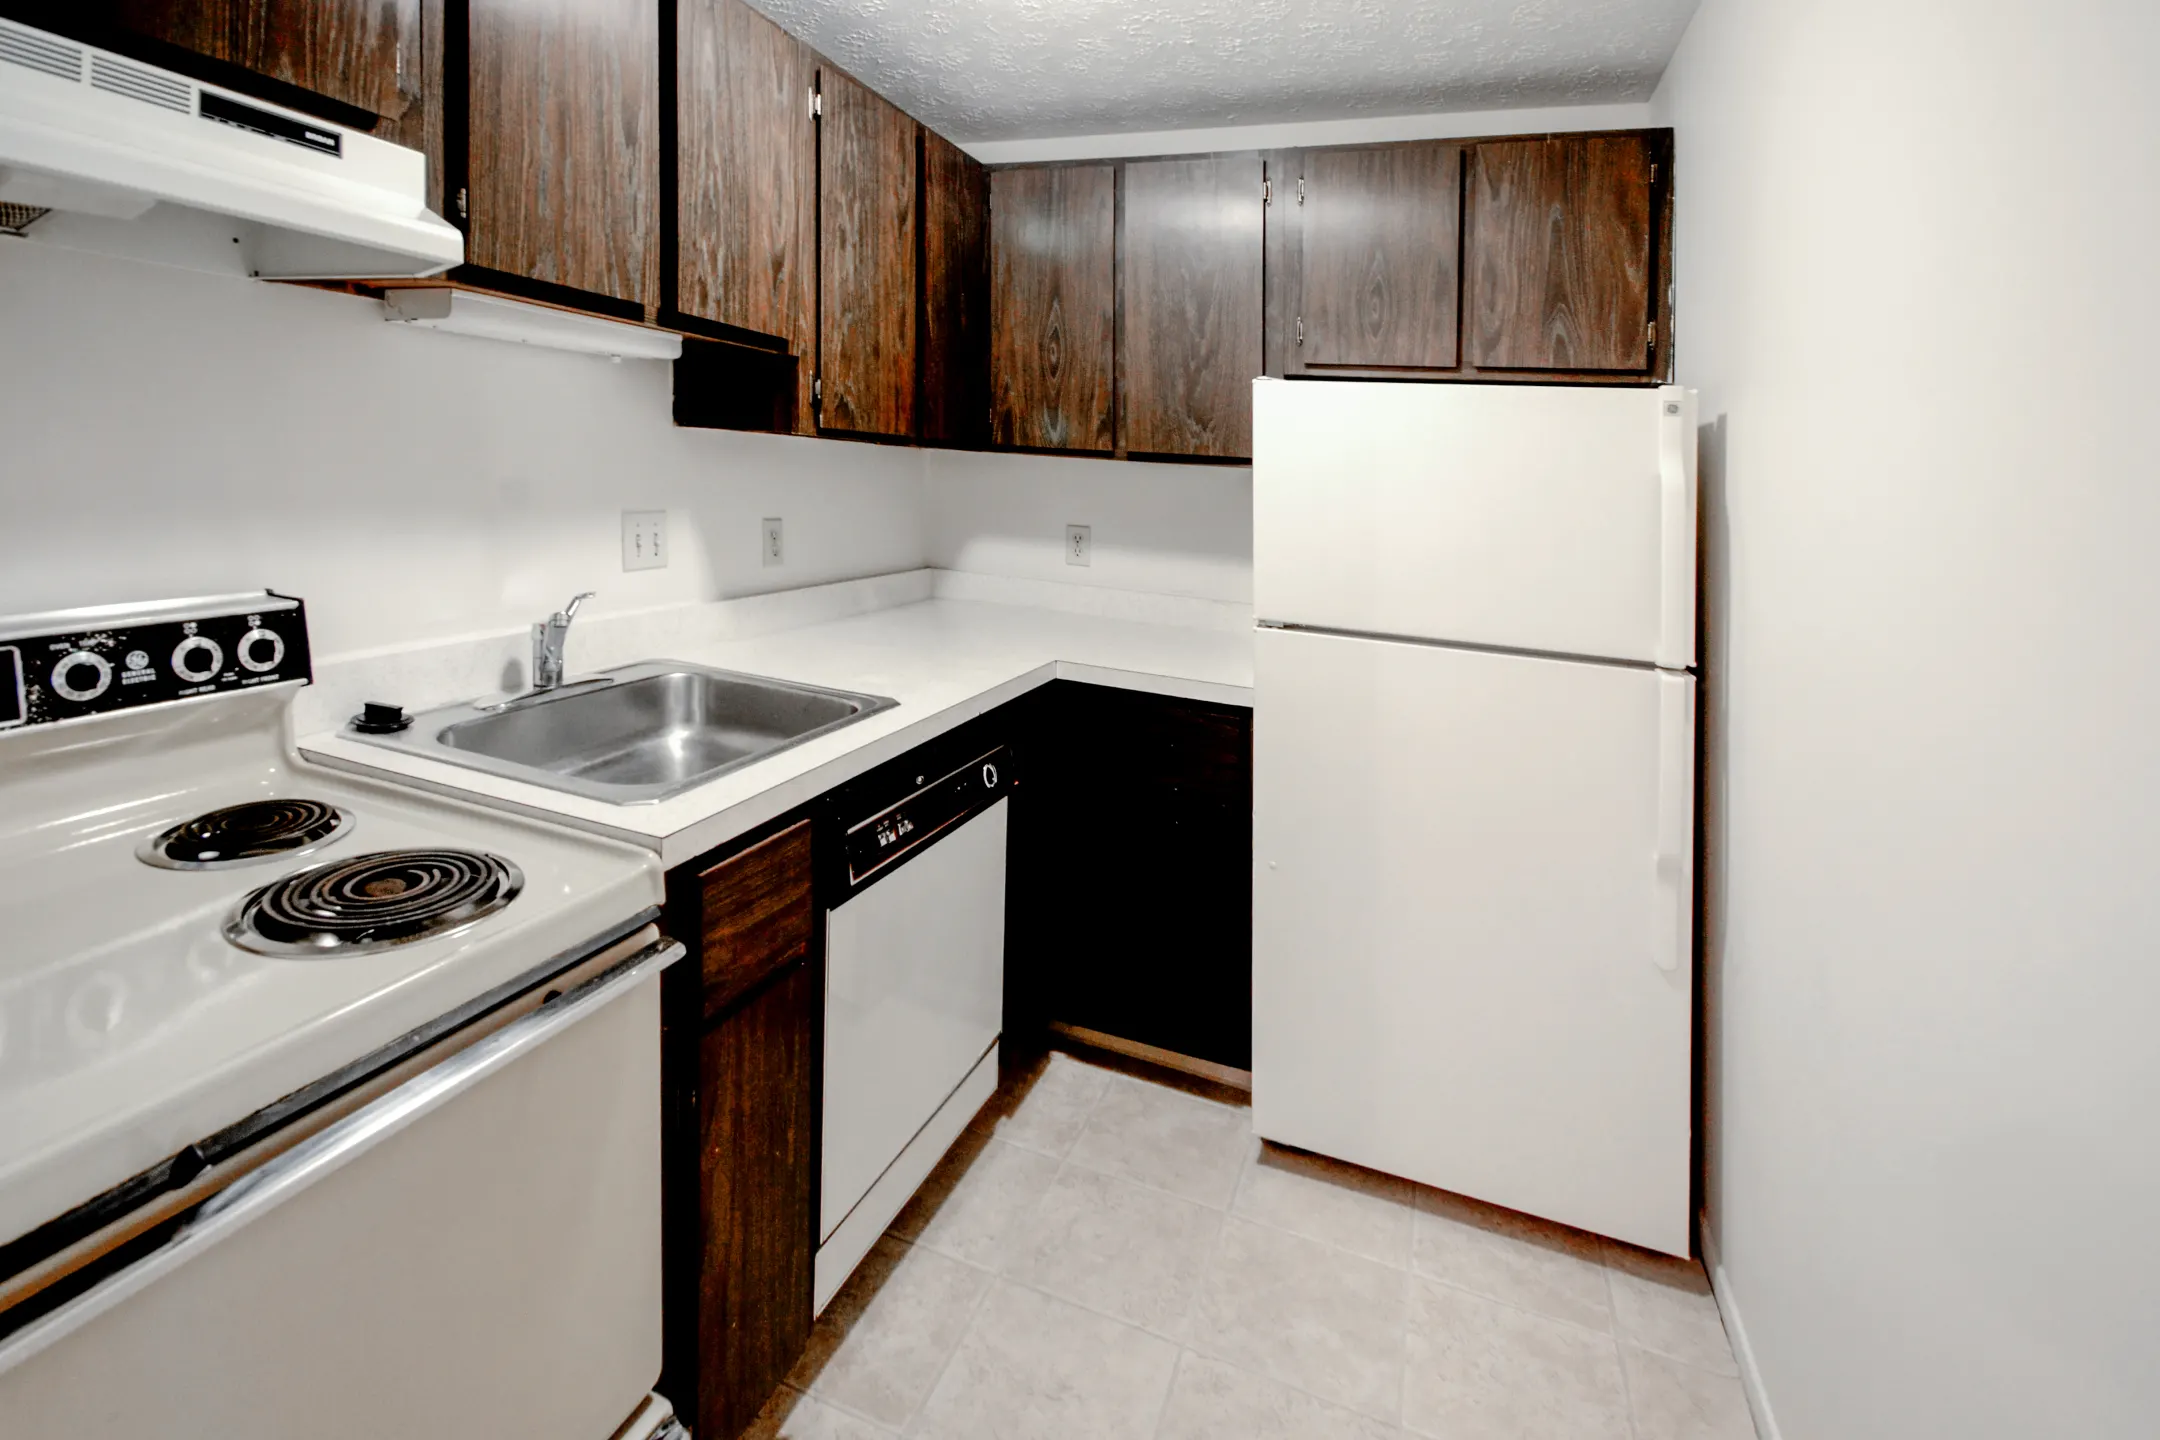 Kitchen - Foxes Lair Apartments - Elyria, OH